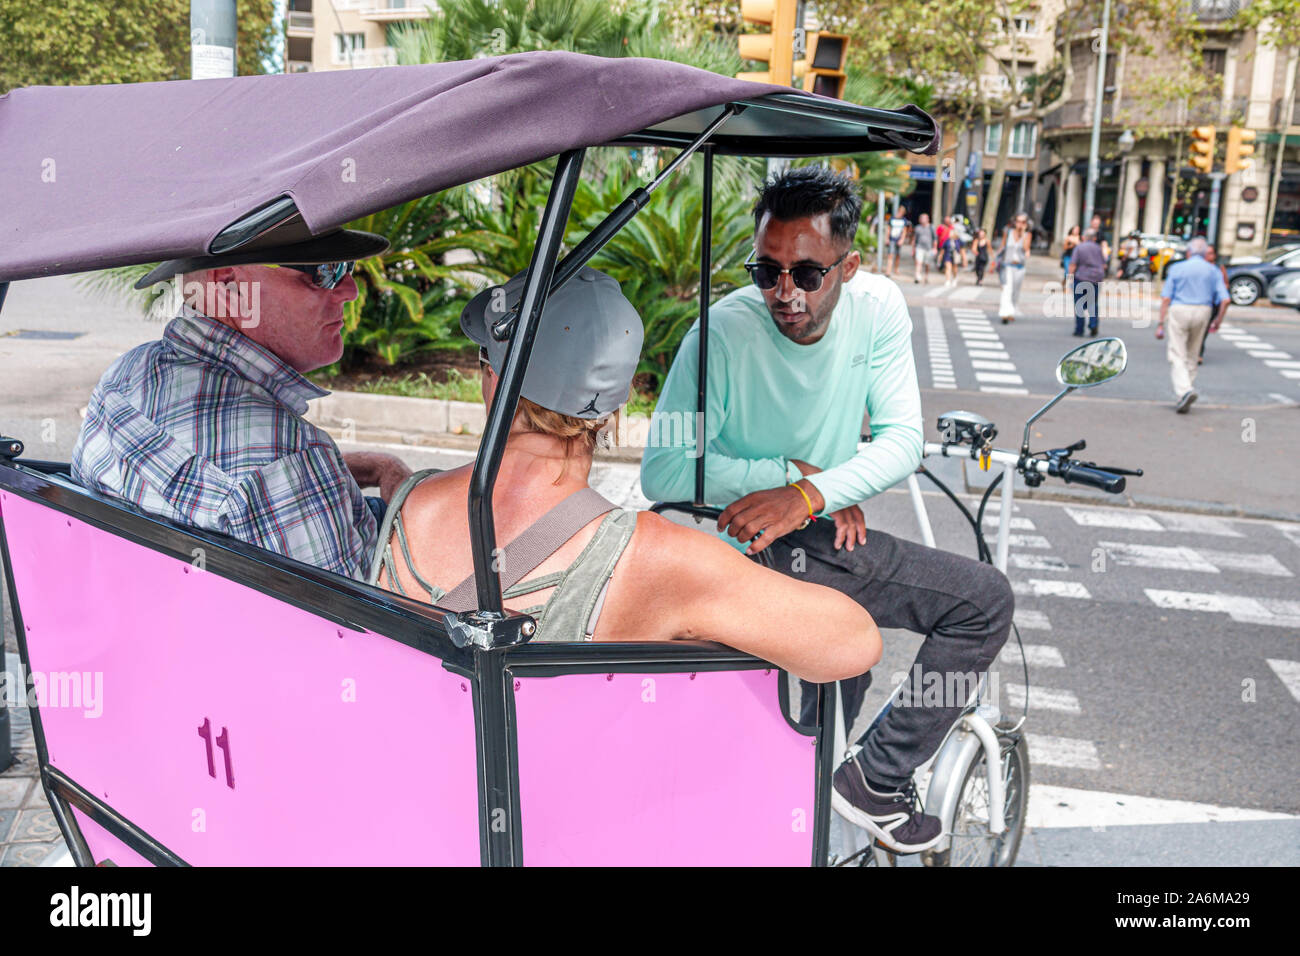 Barcelona Spain,Catalonia Eixample,Plaza de Mosen Jacinto Verdaguer,Avinguda Diagonal,pedicab,bicycle rickshaw,passengers,driver,man,woman,couple,ES19 Stock Photo